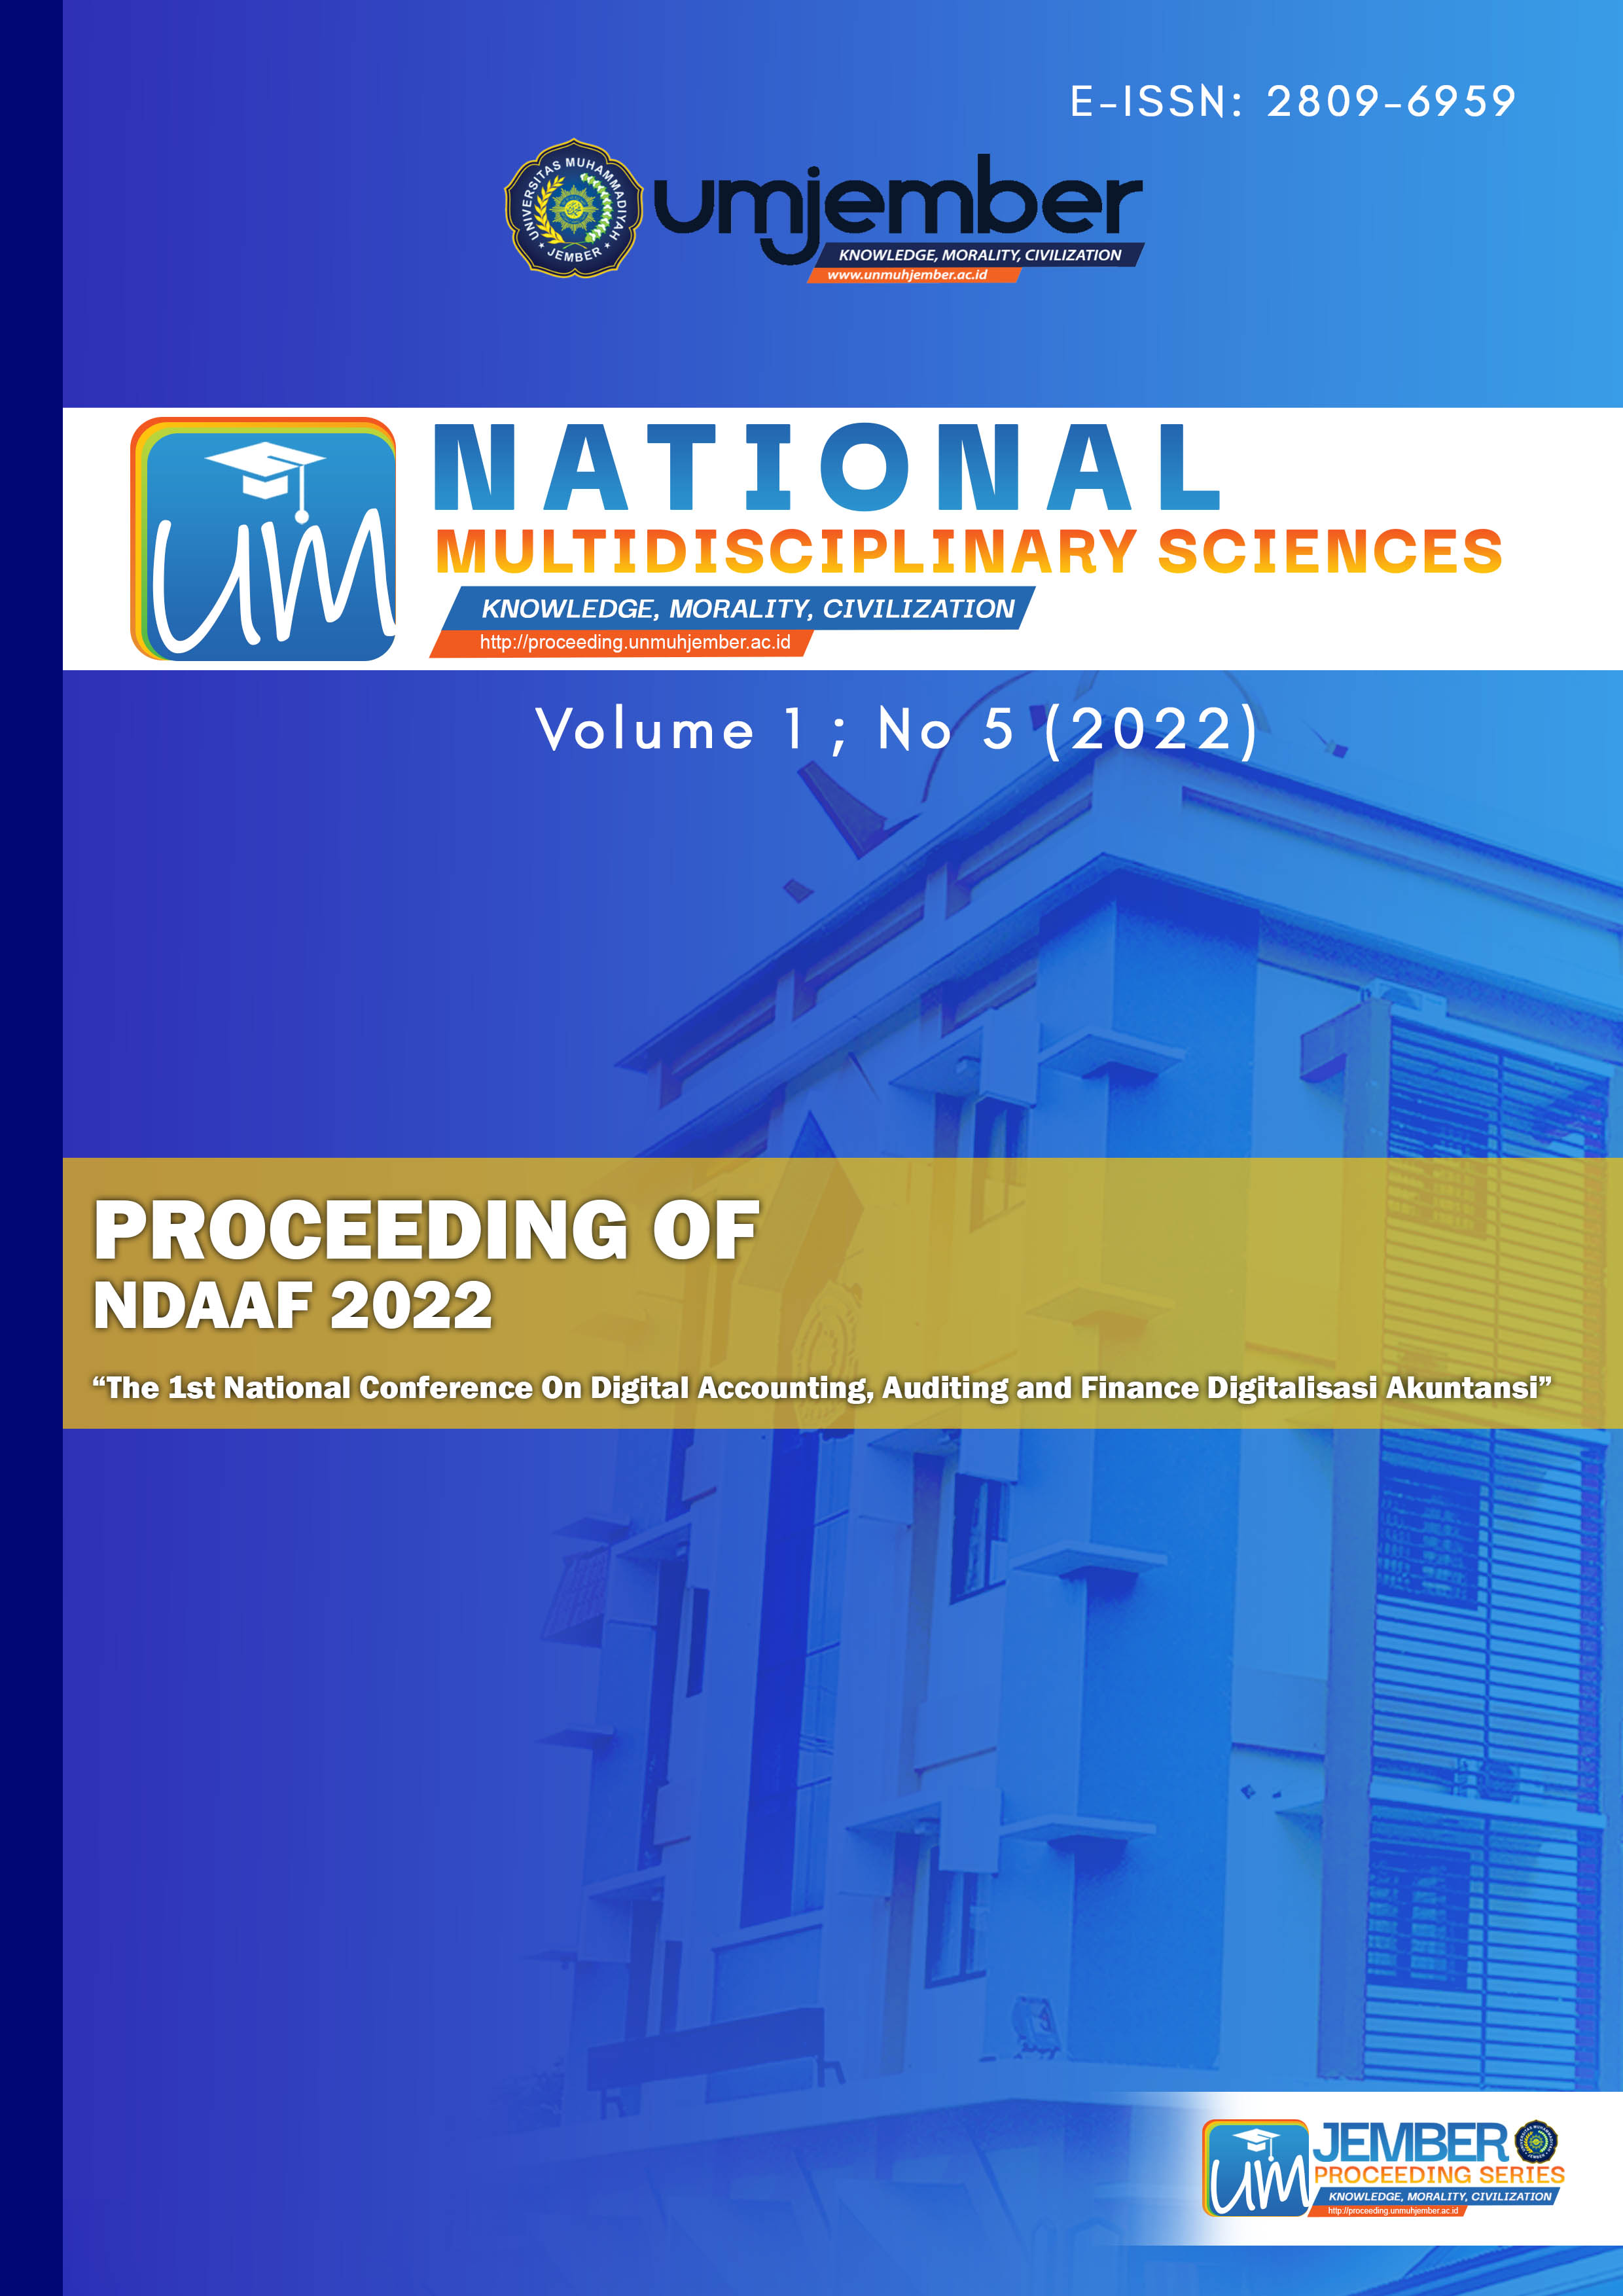 					View Vol. 1 No. 5 (2022): Proceedings NDAAF 2022
				